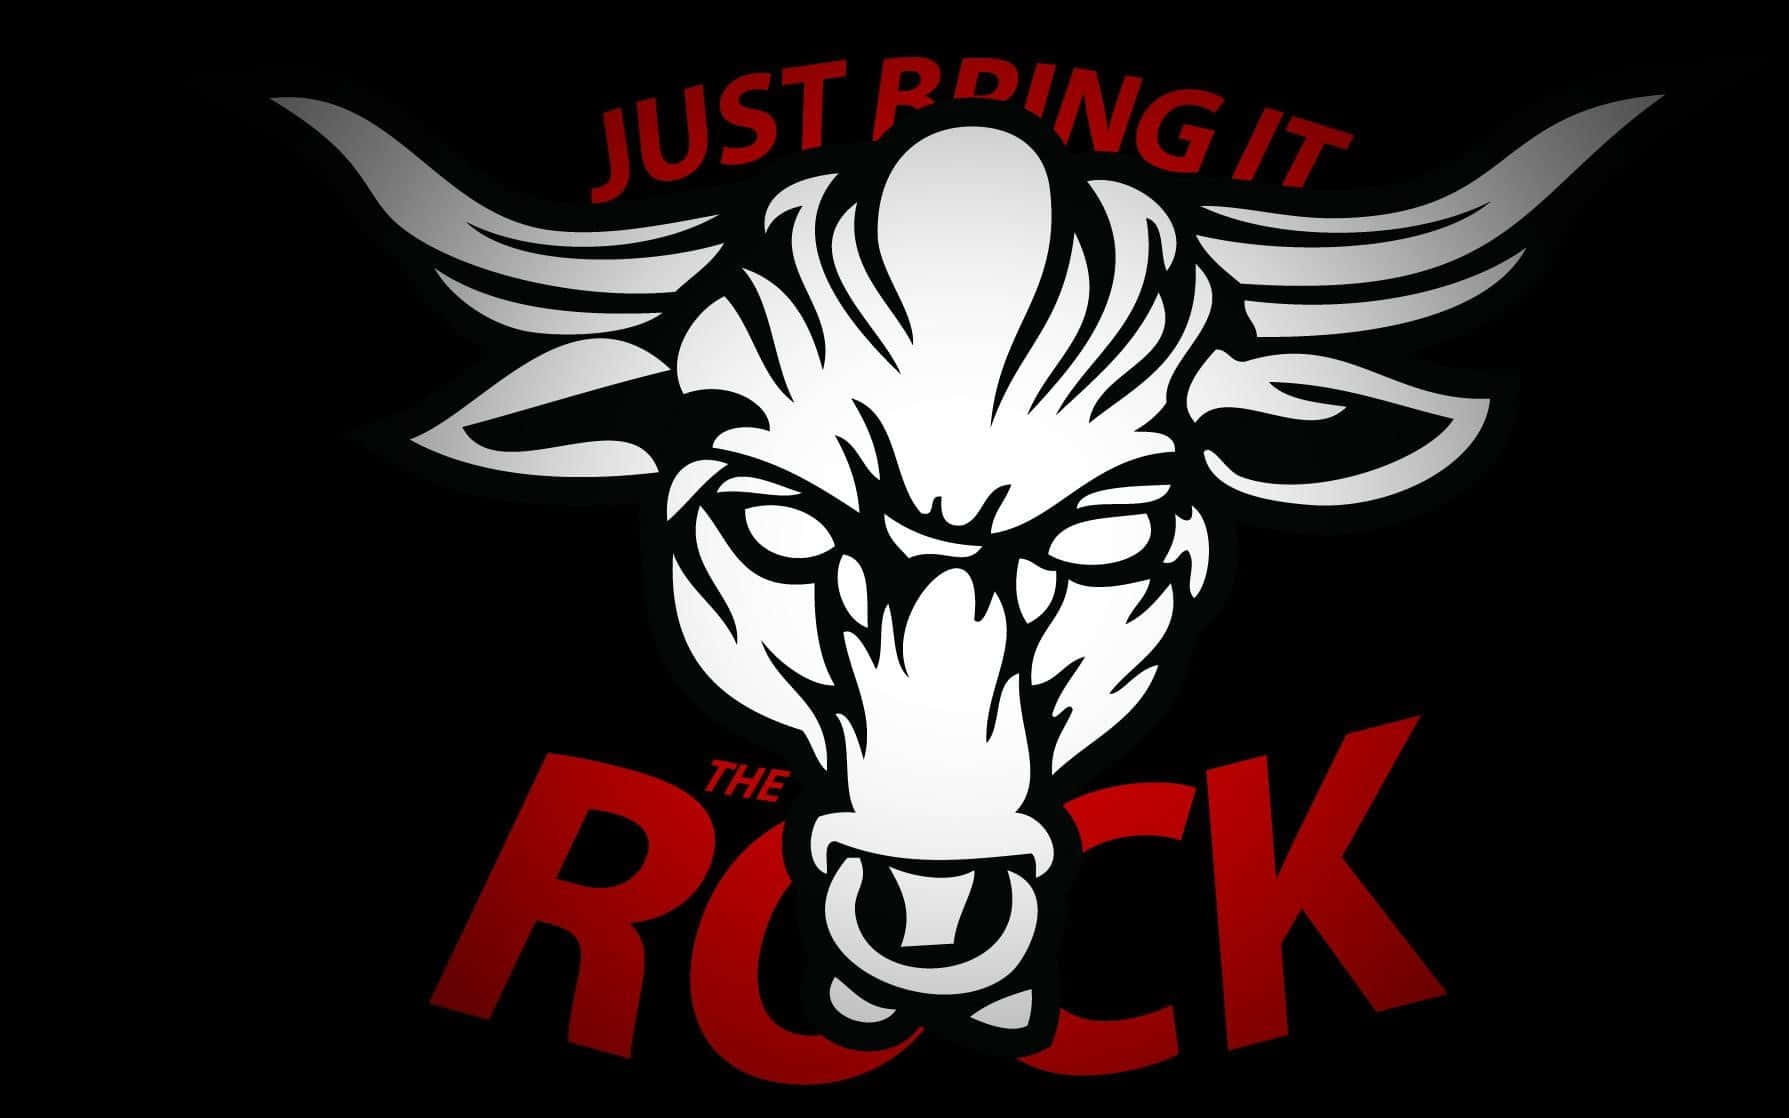 Logotipodel Proyecto Rock Fondo de pantalla